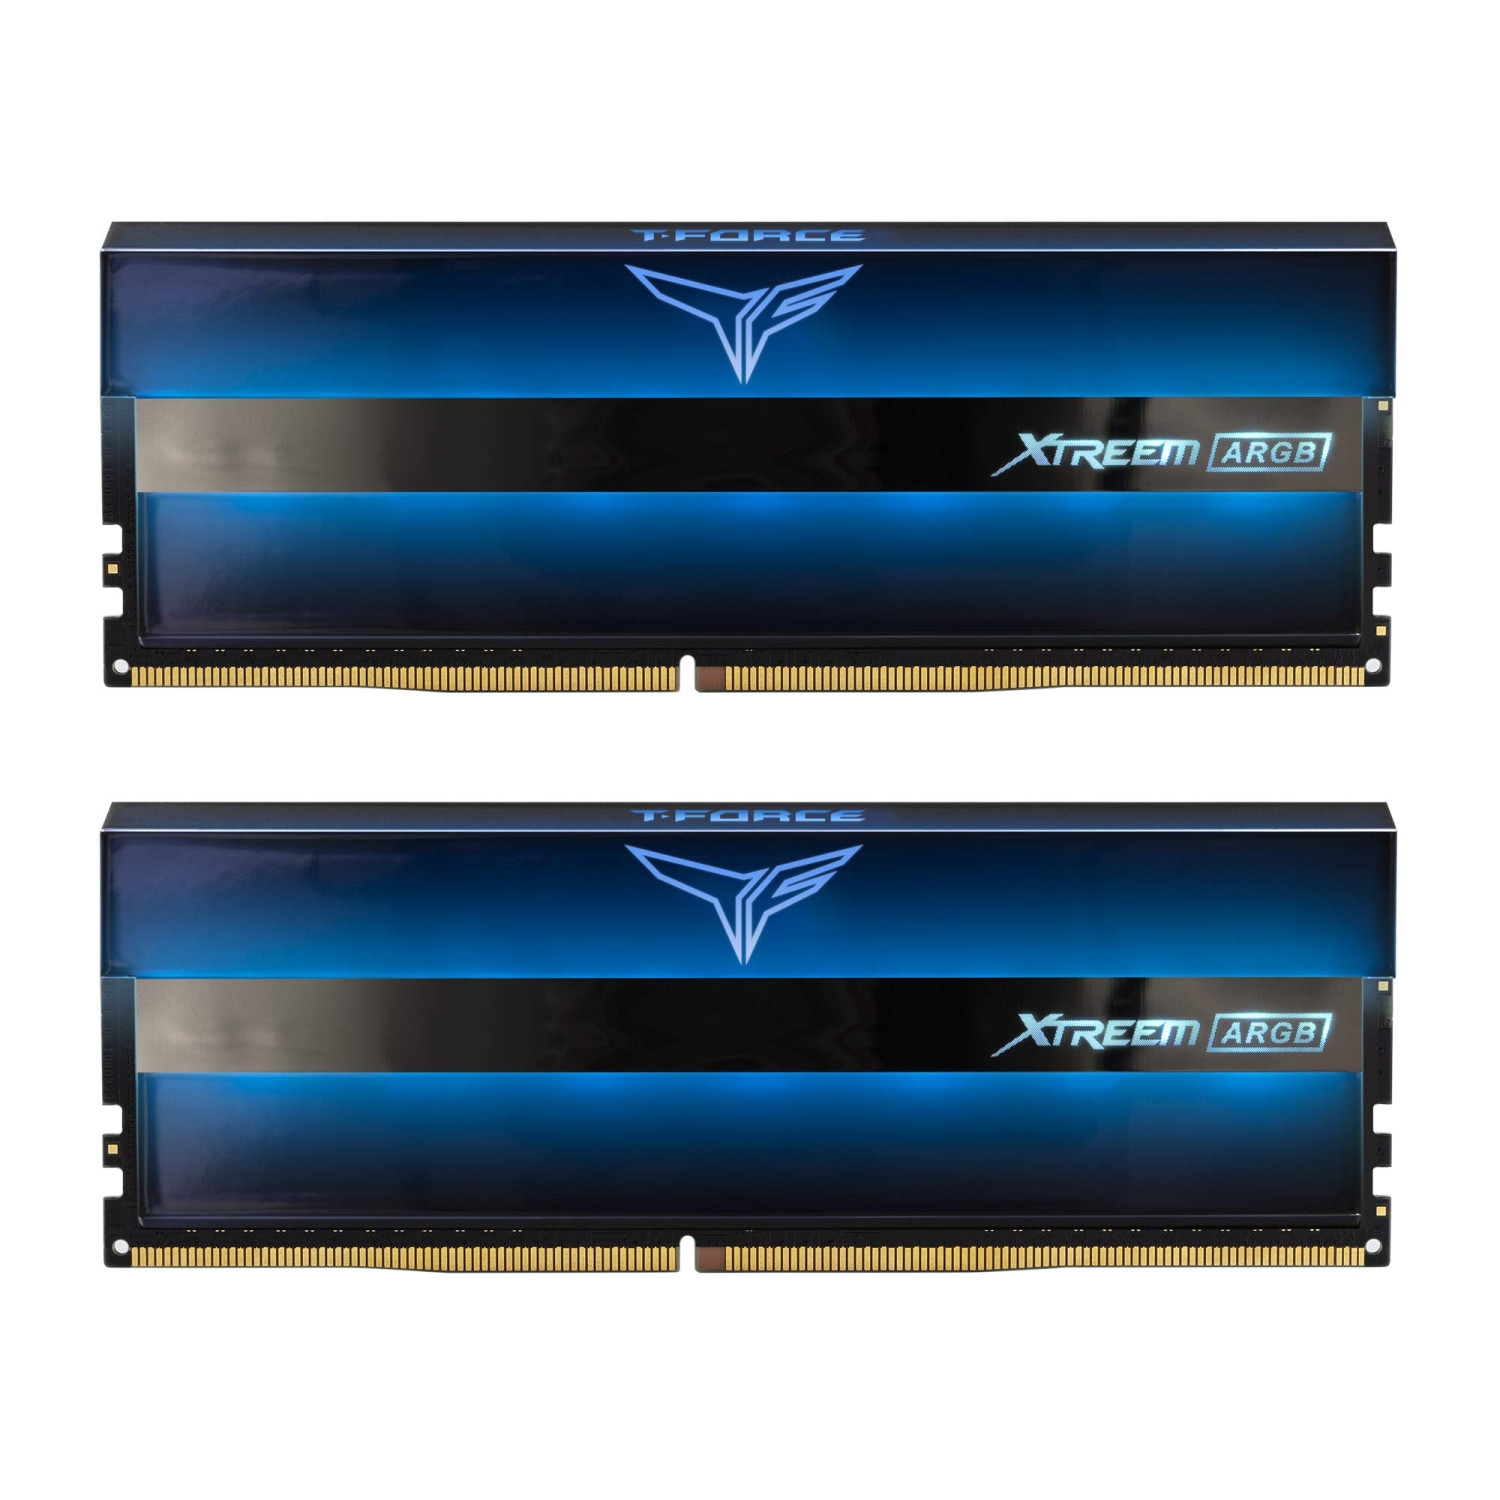 رم Team Group T-Force Xtreem ARGB 64GB Dual 3200MHz CL16 - Blue